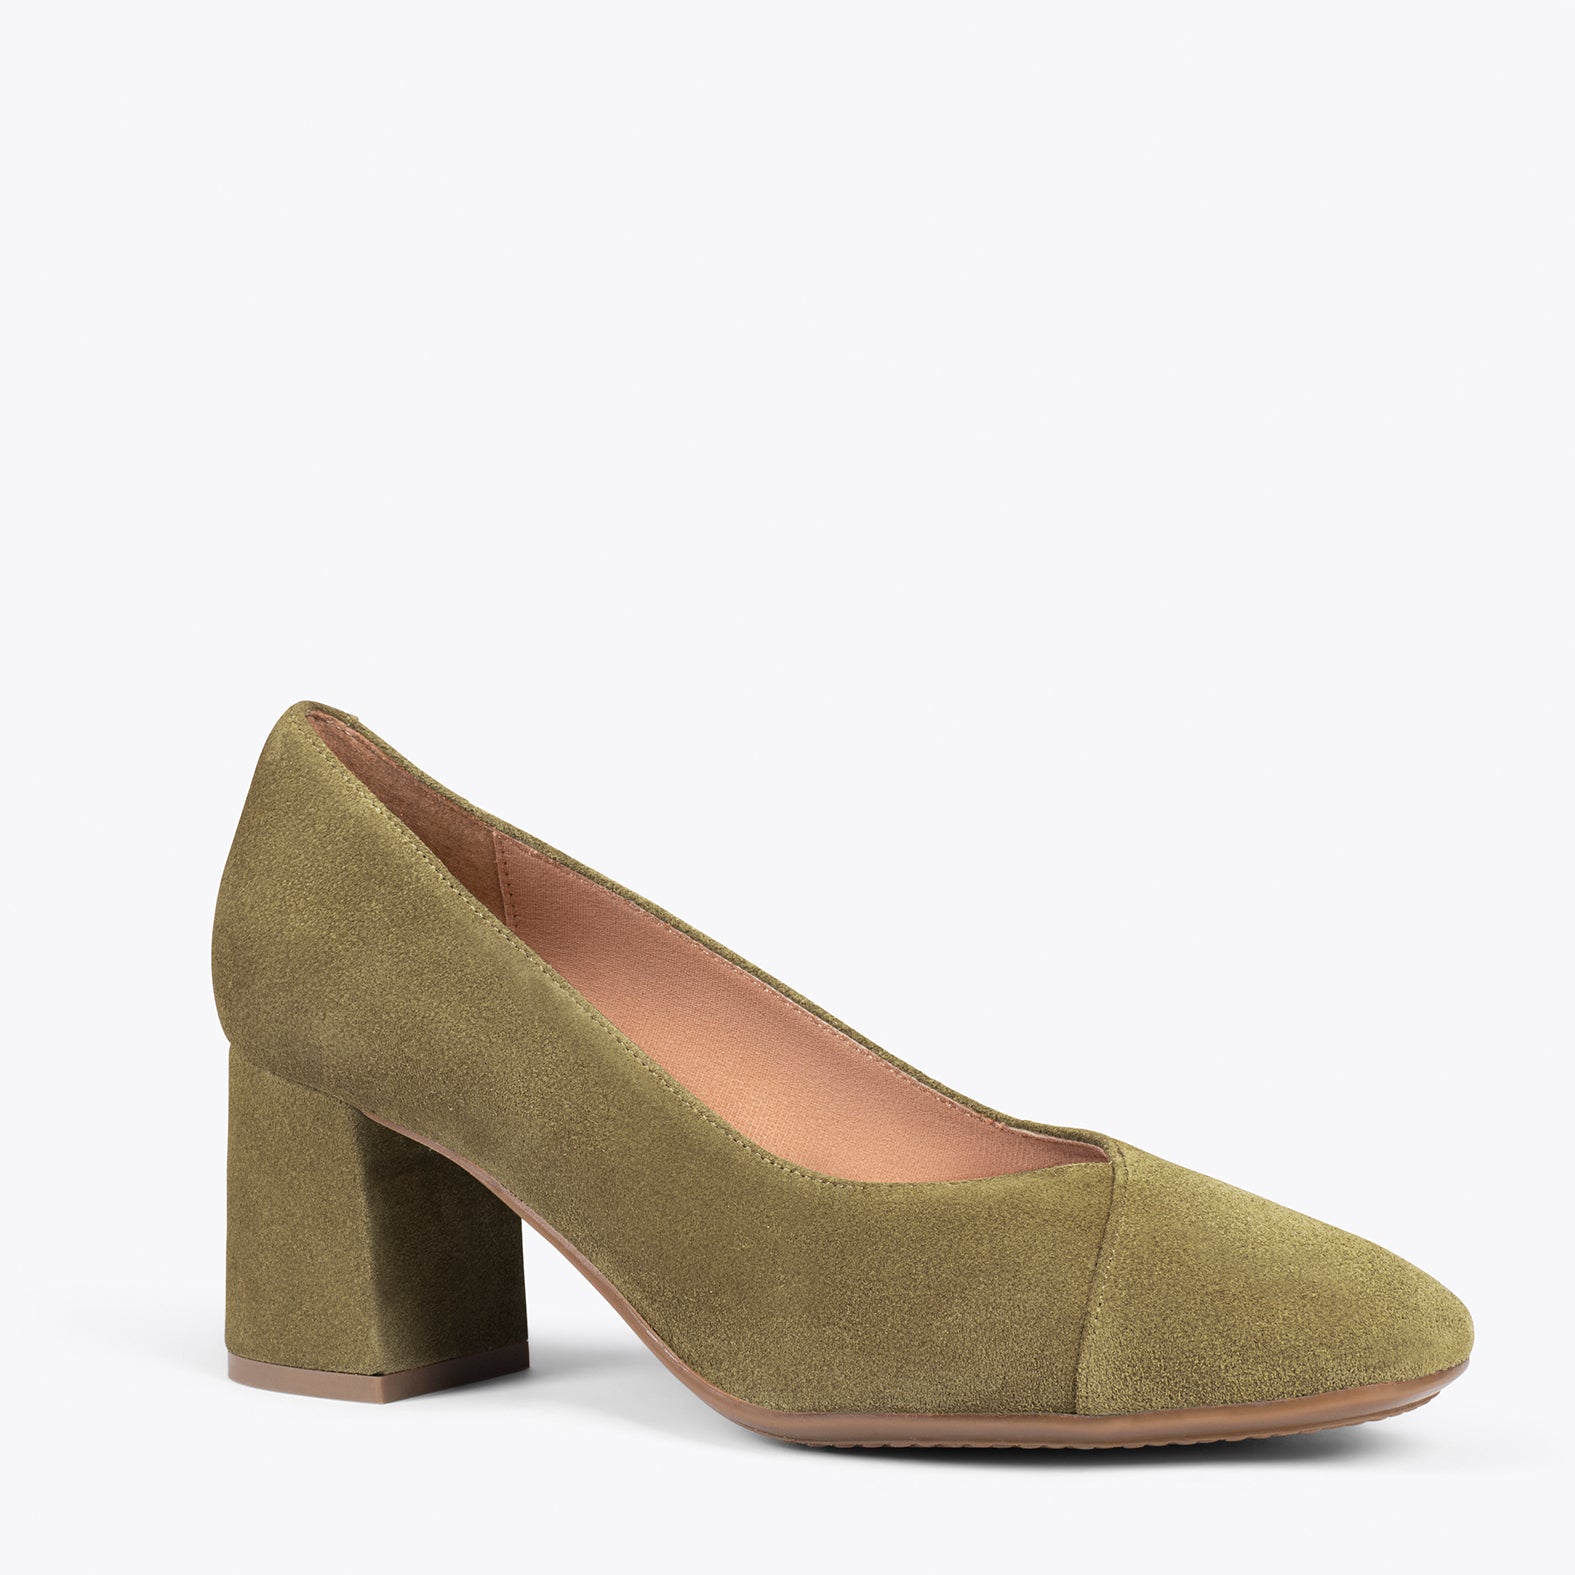 EMMA – KHAKI high heels with square toe